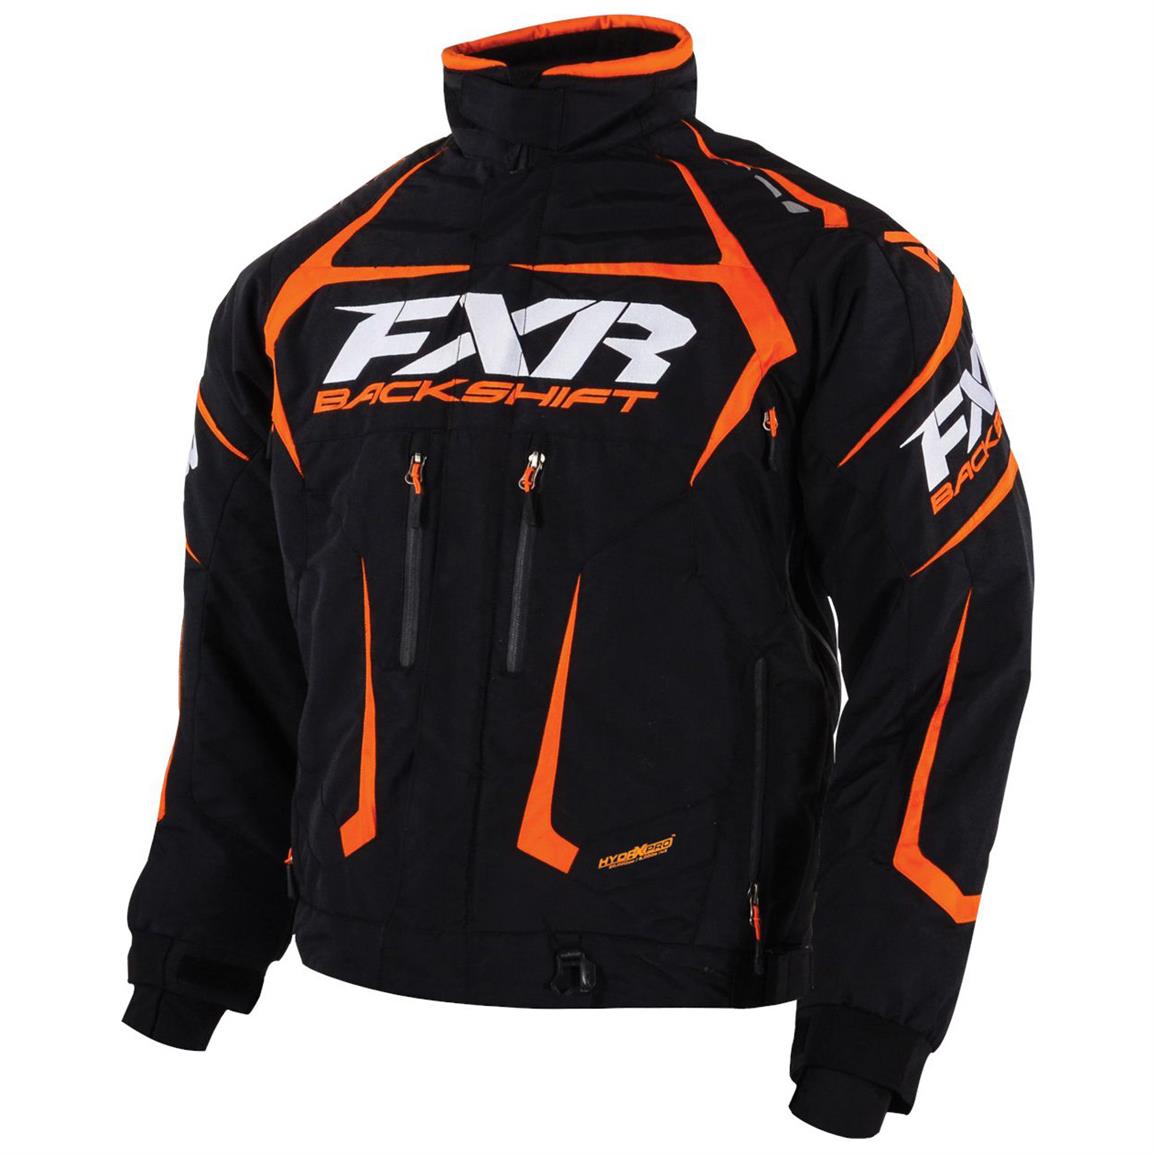 FXR Backshift Pro Jacket - 627786, Snowmobile Clothing at Sportsman's Guide